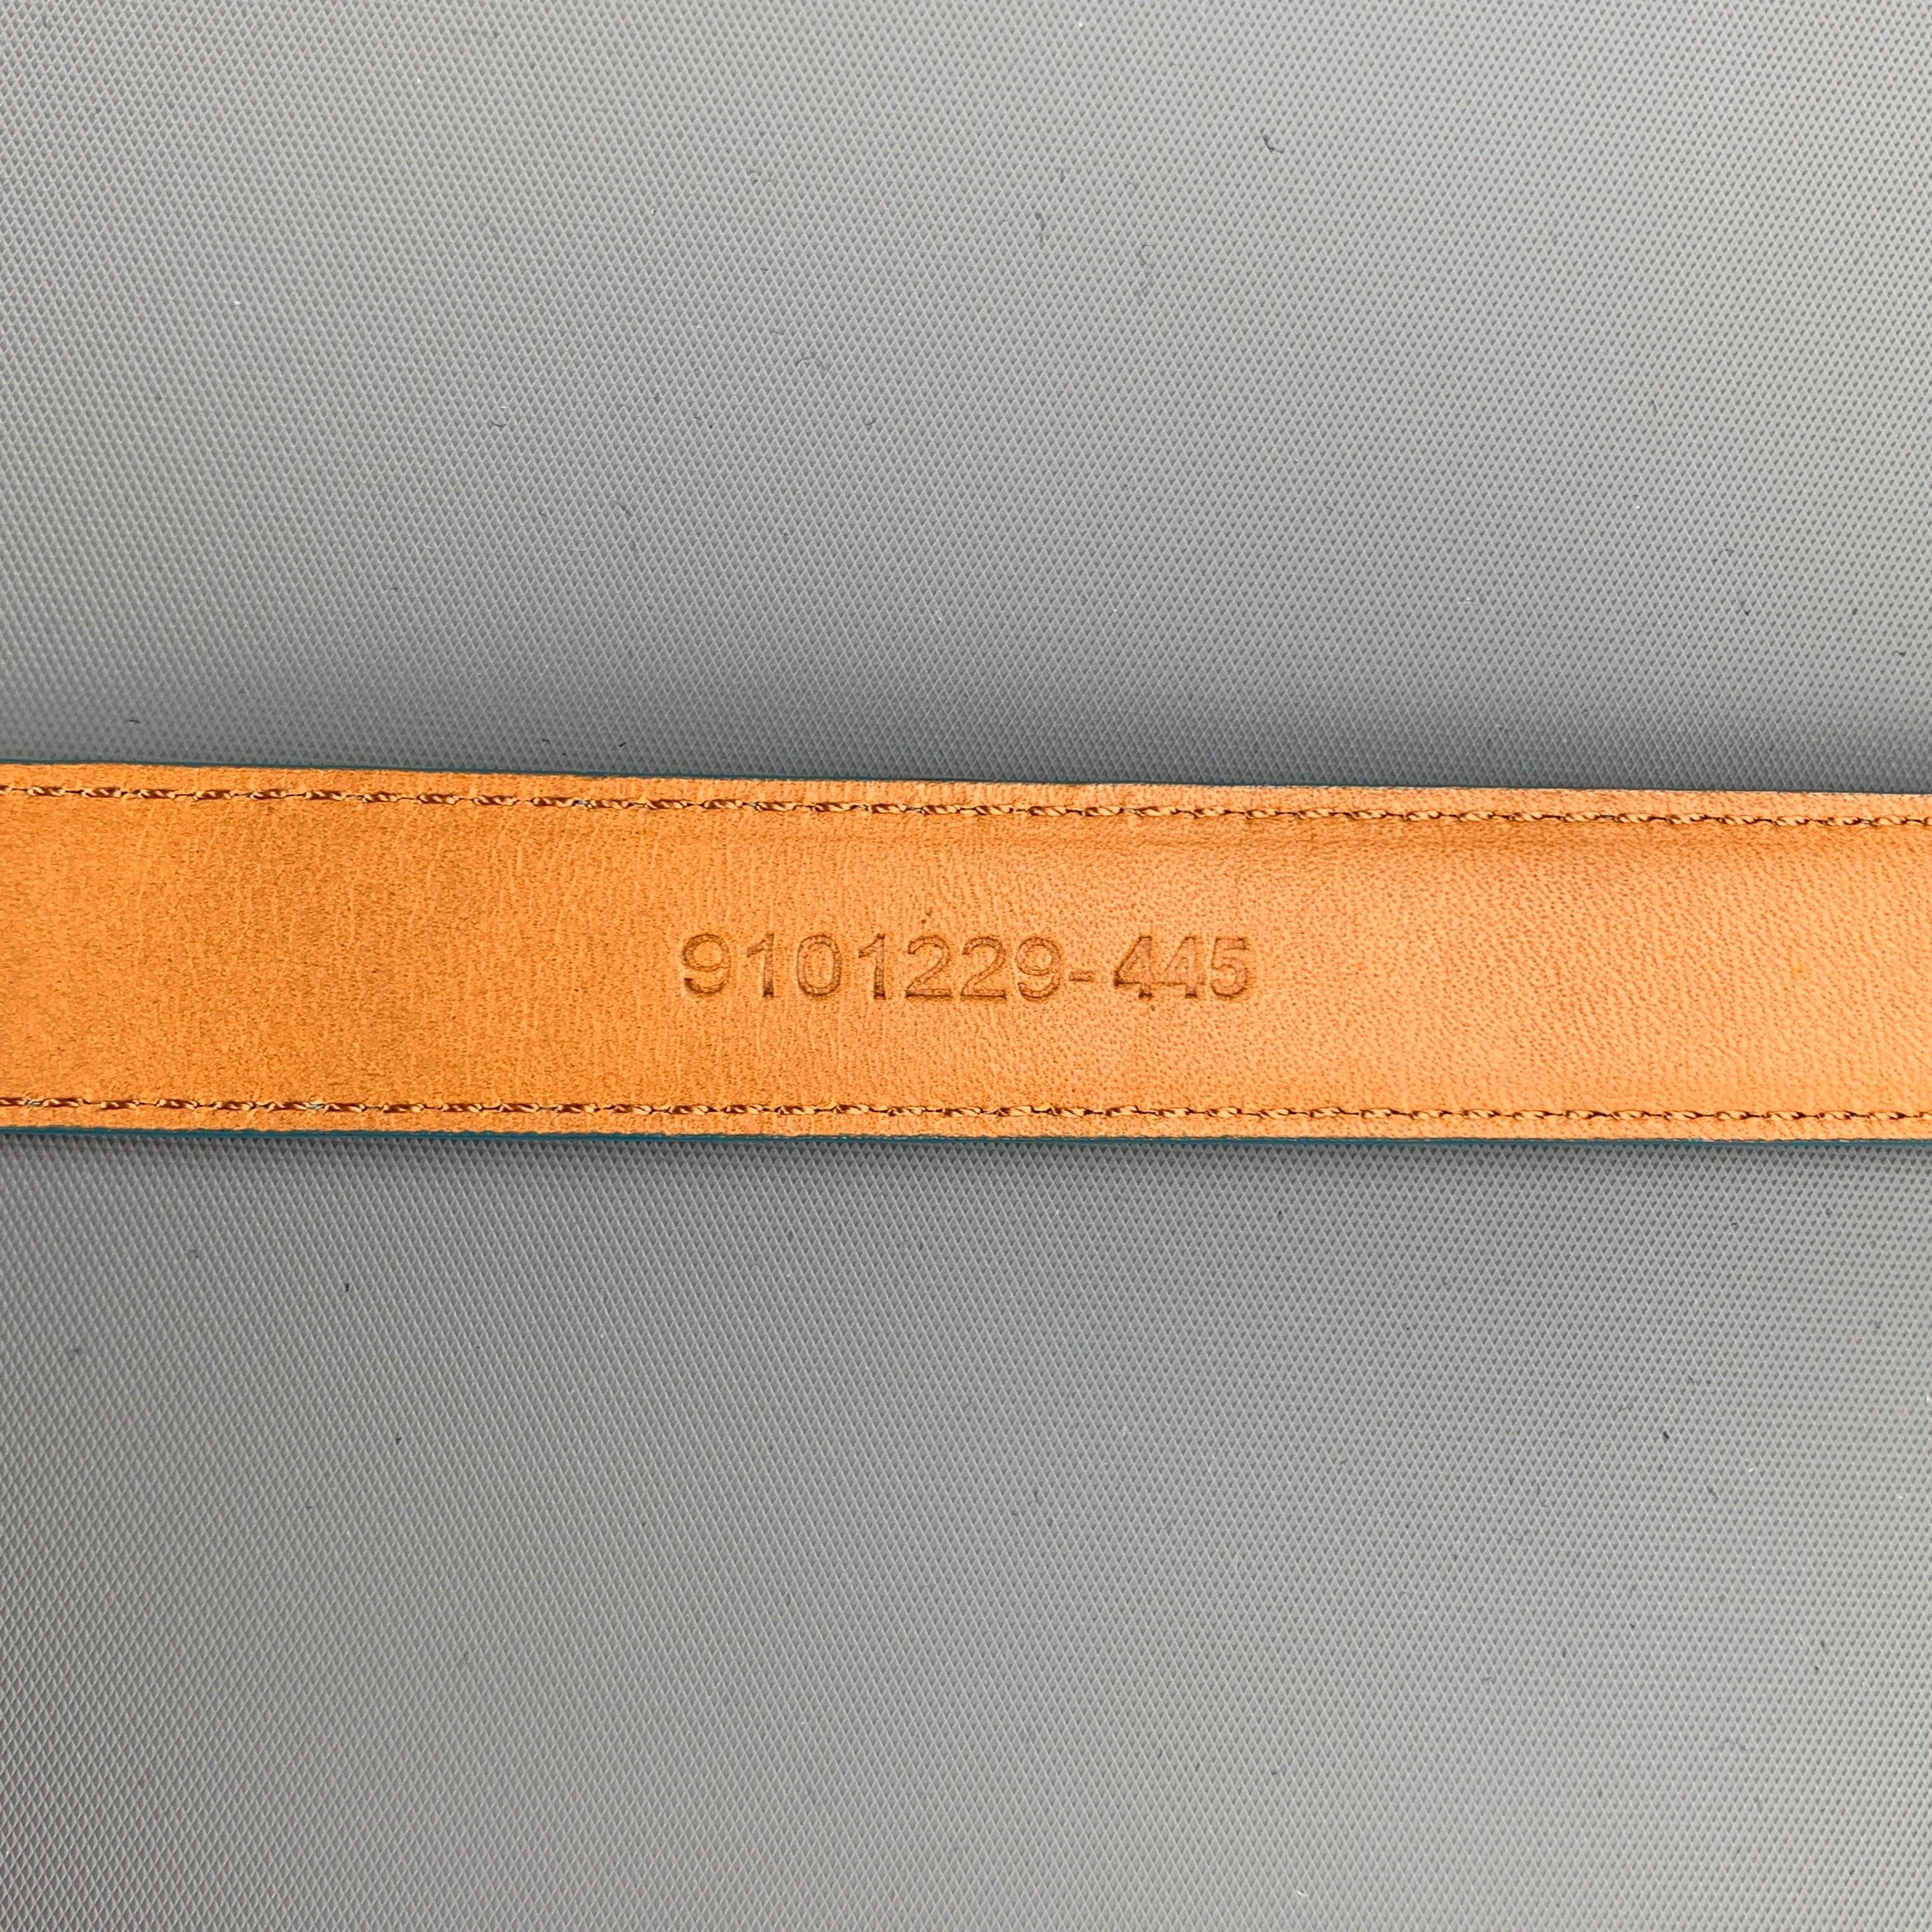 RALPH LAUREN Size M Teal Embossed Leather Skinny Belt For Sale 2